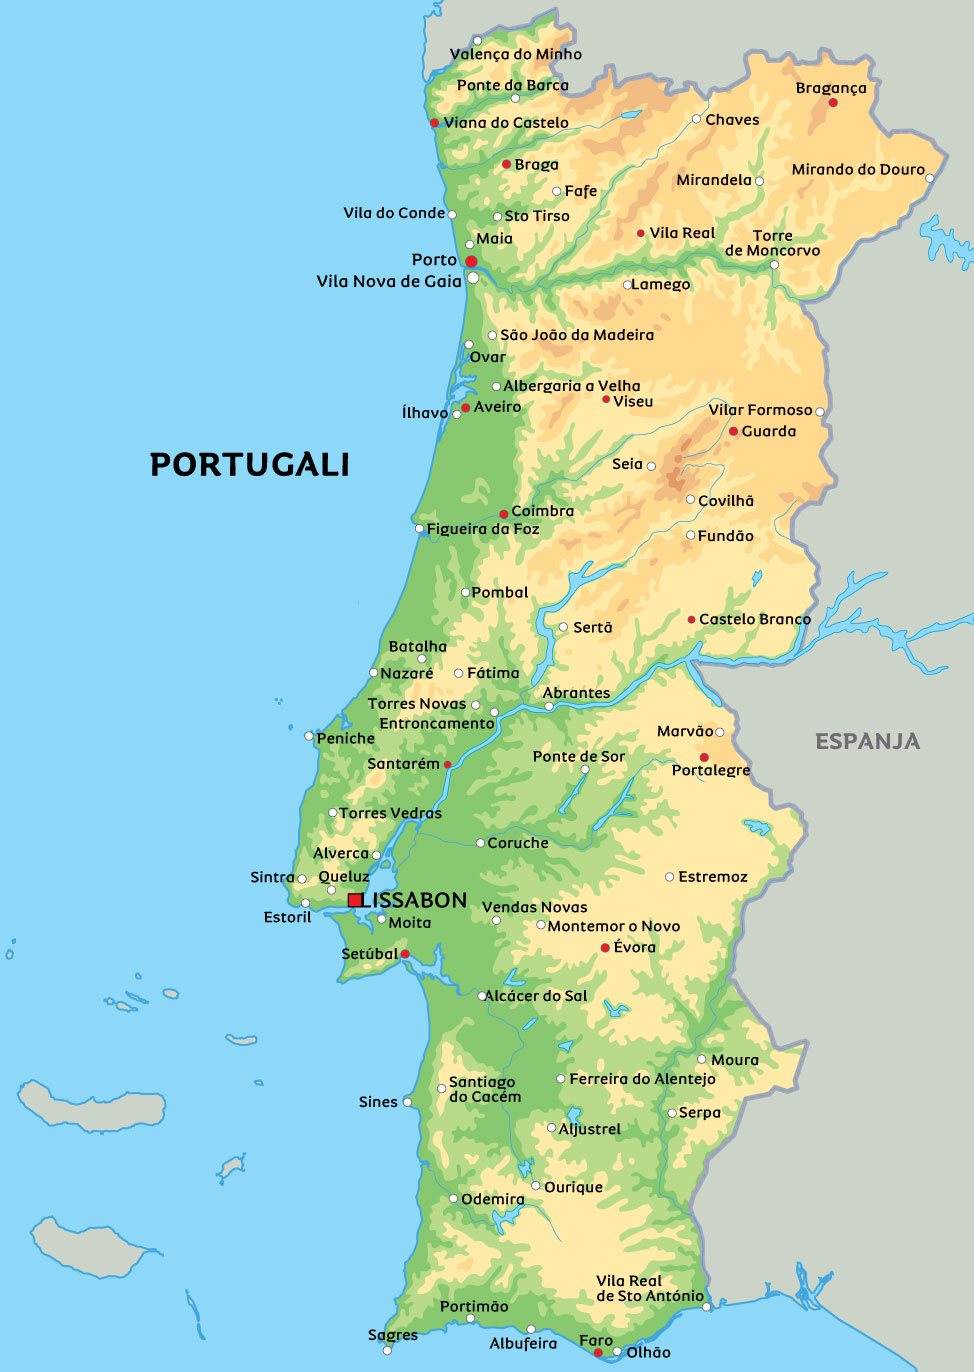 Kartta Portugalista: kts. esim. kaupunkien sijainti kartasta